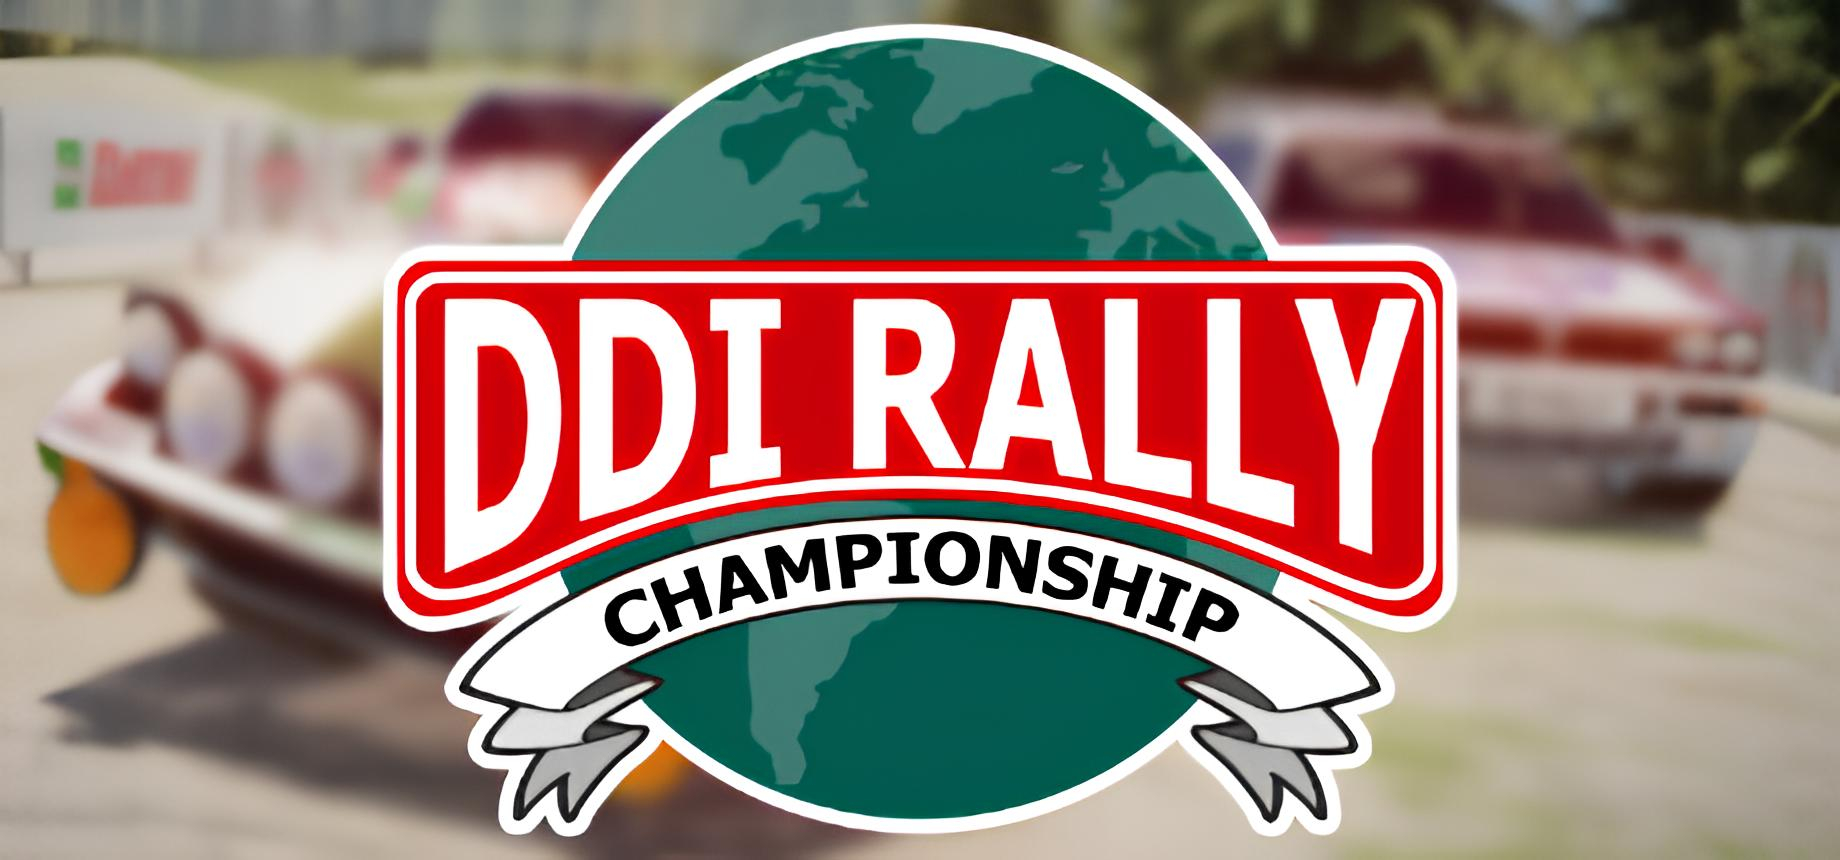 Обложка игры DDI Rally Championship